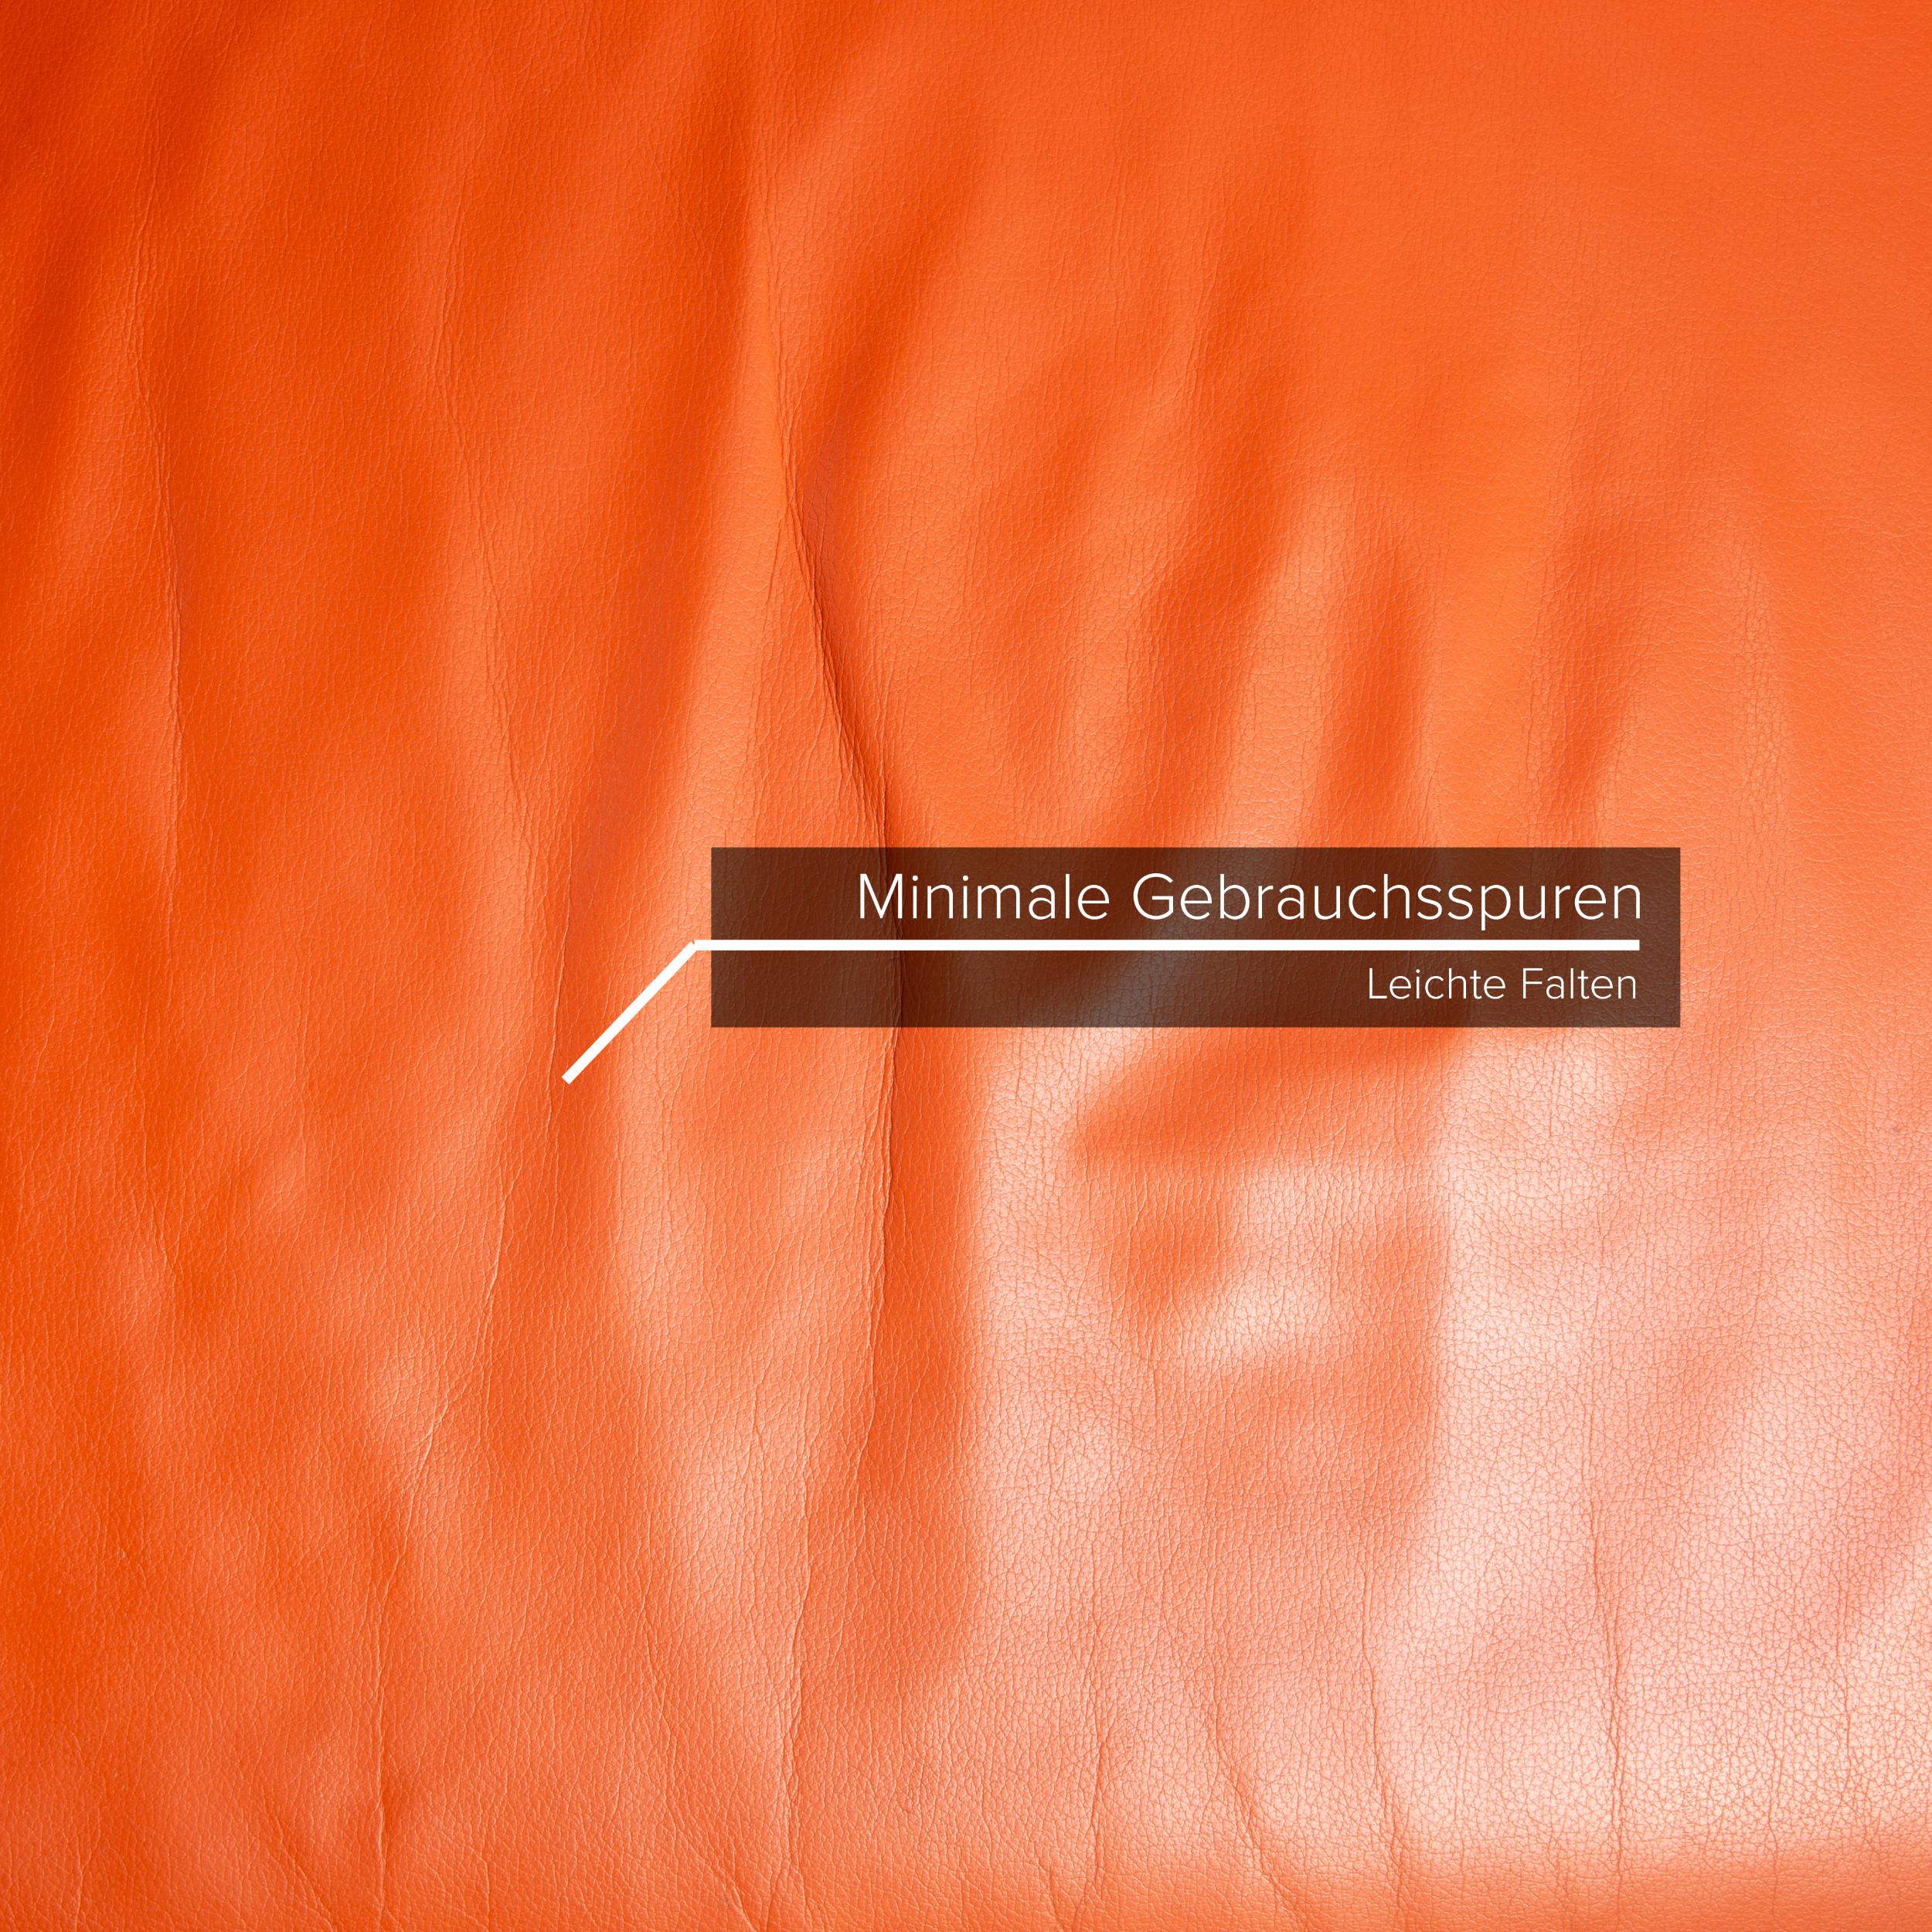 orange leather sofa